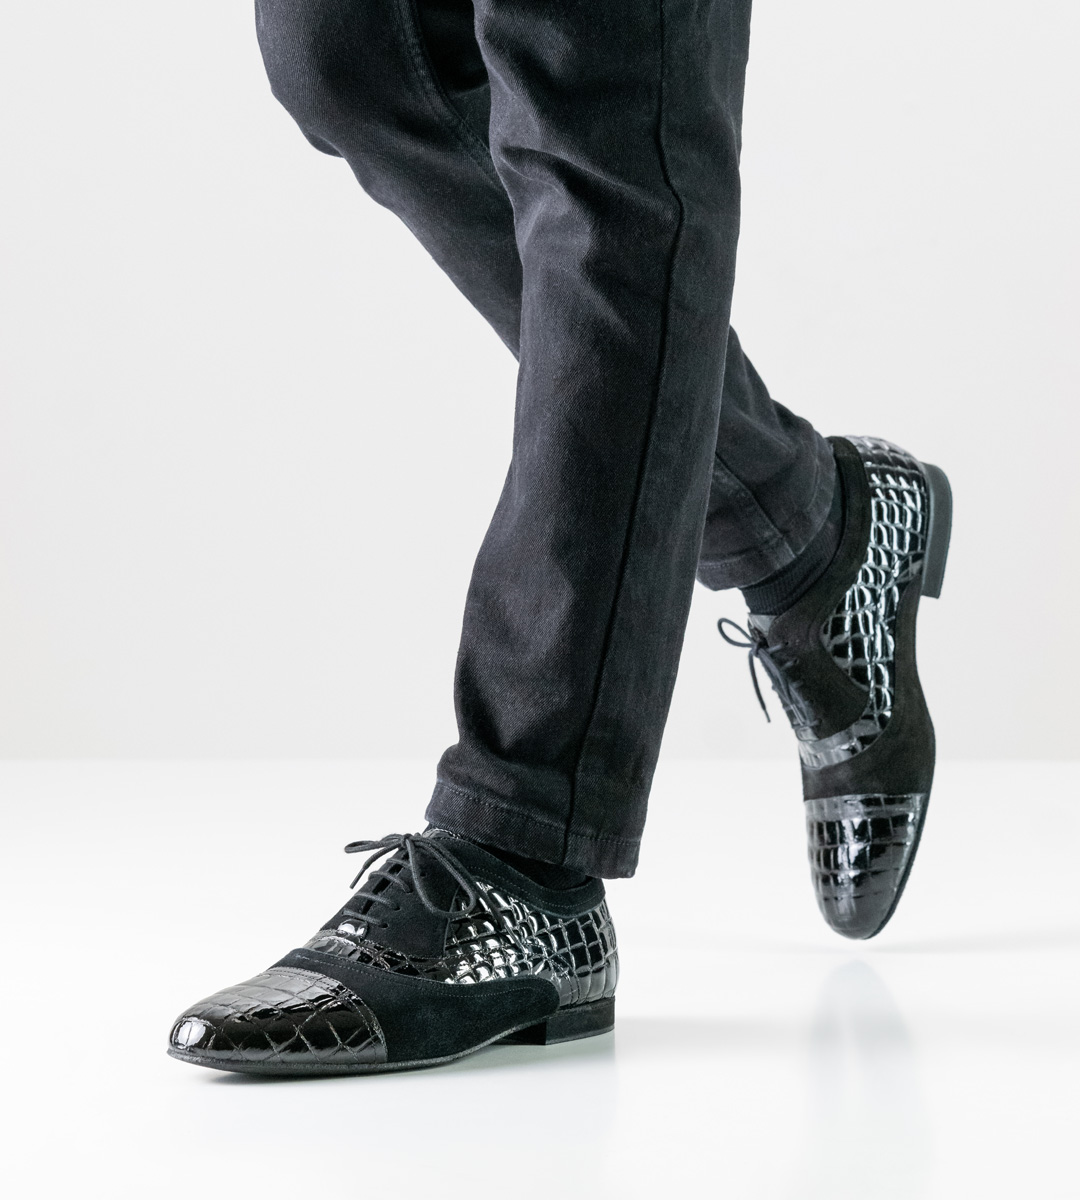 black jeans in combination with black men's dance shoe by Werner Kern